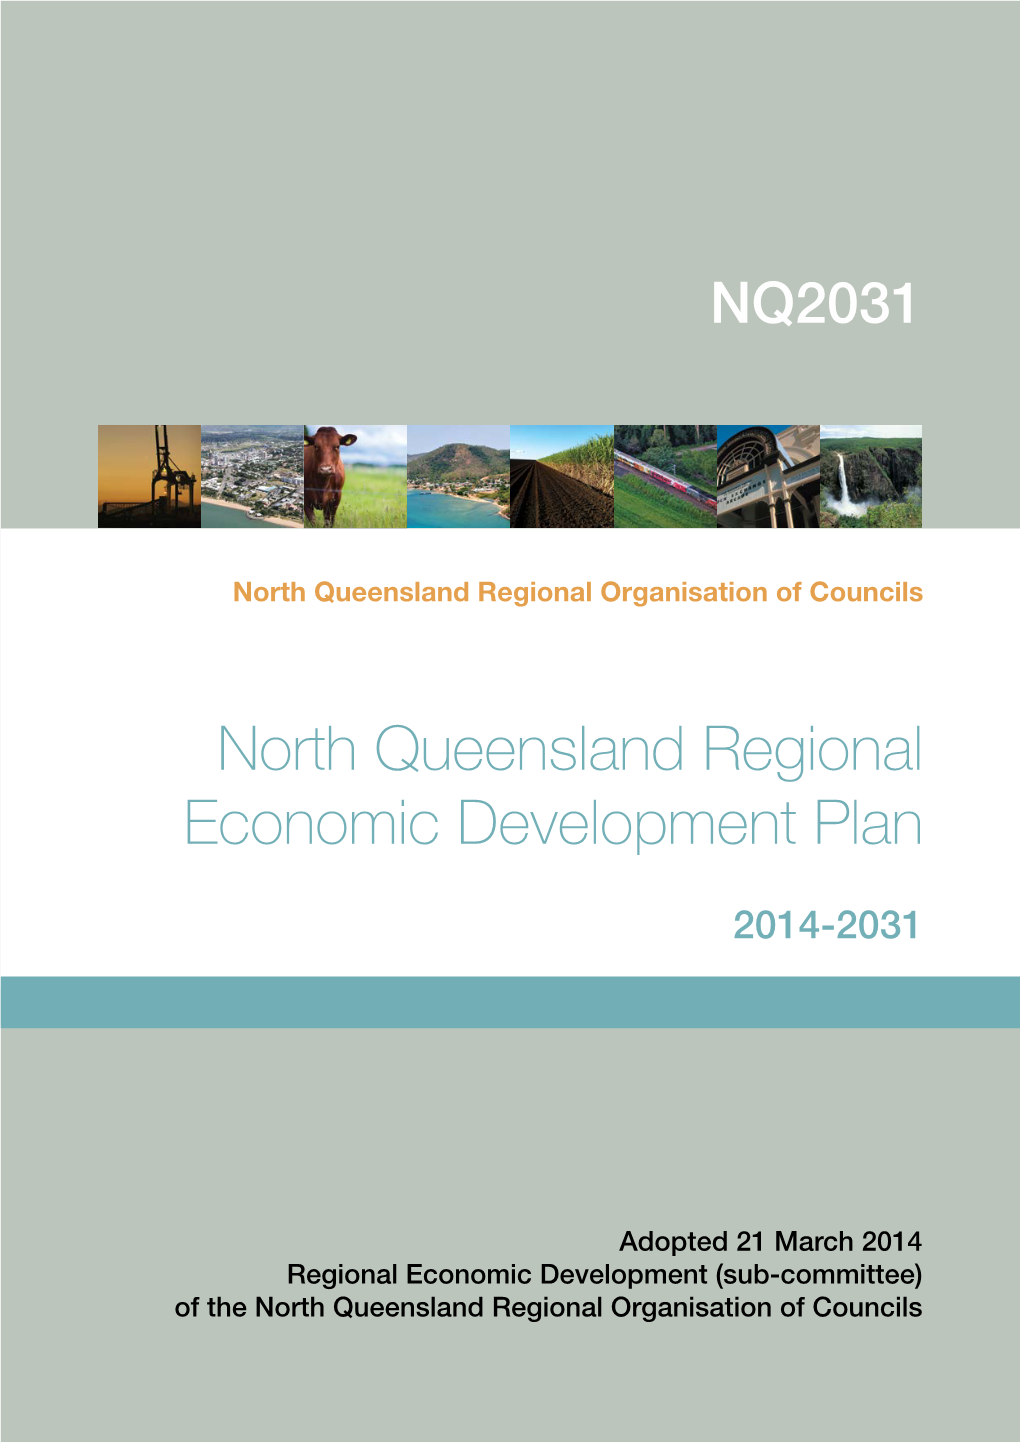 North Queensland Regional Economic Development Plan